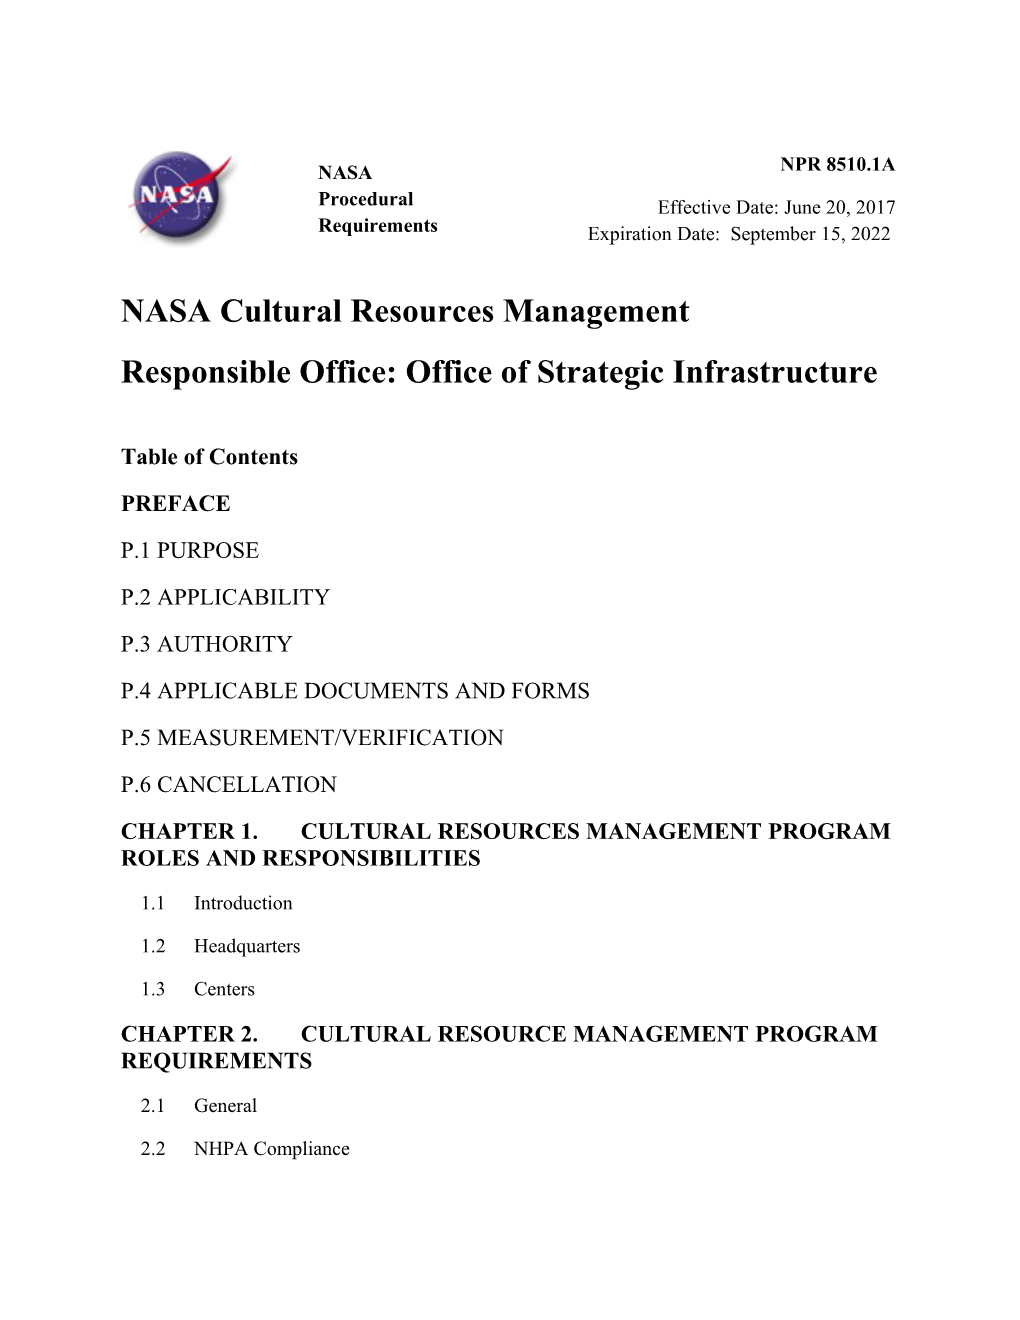 NASA Cultural Resources Management